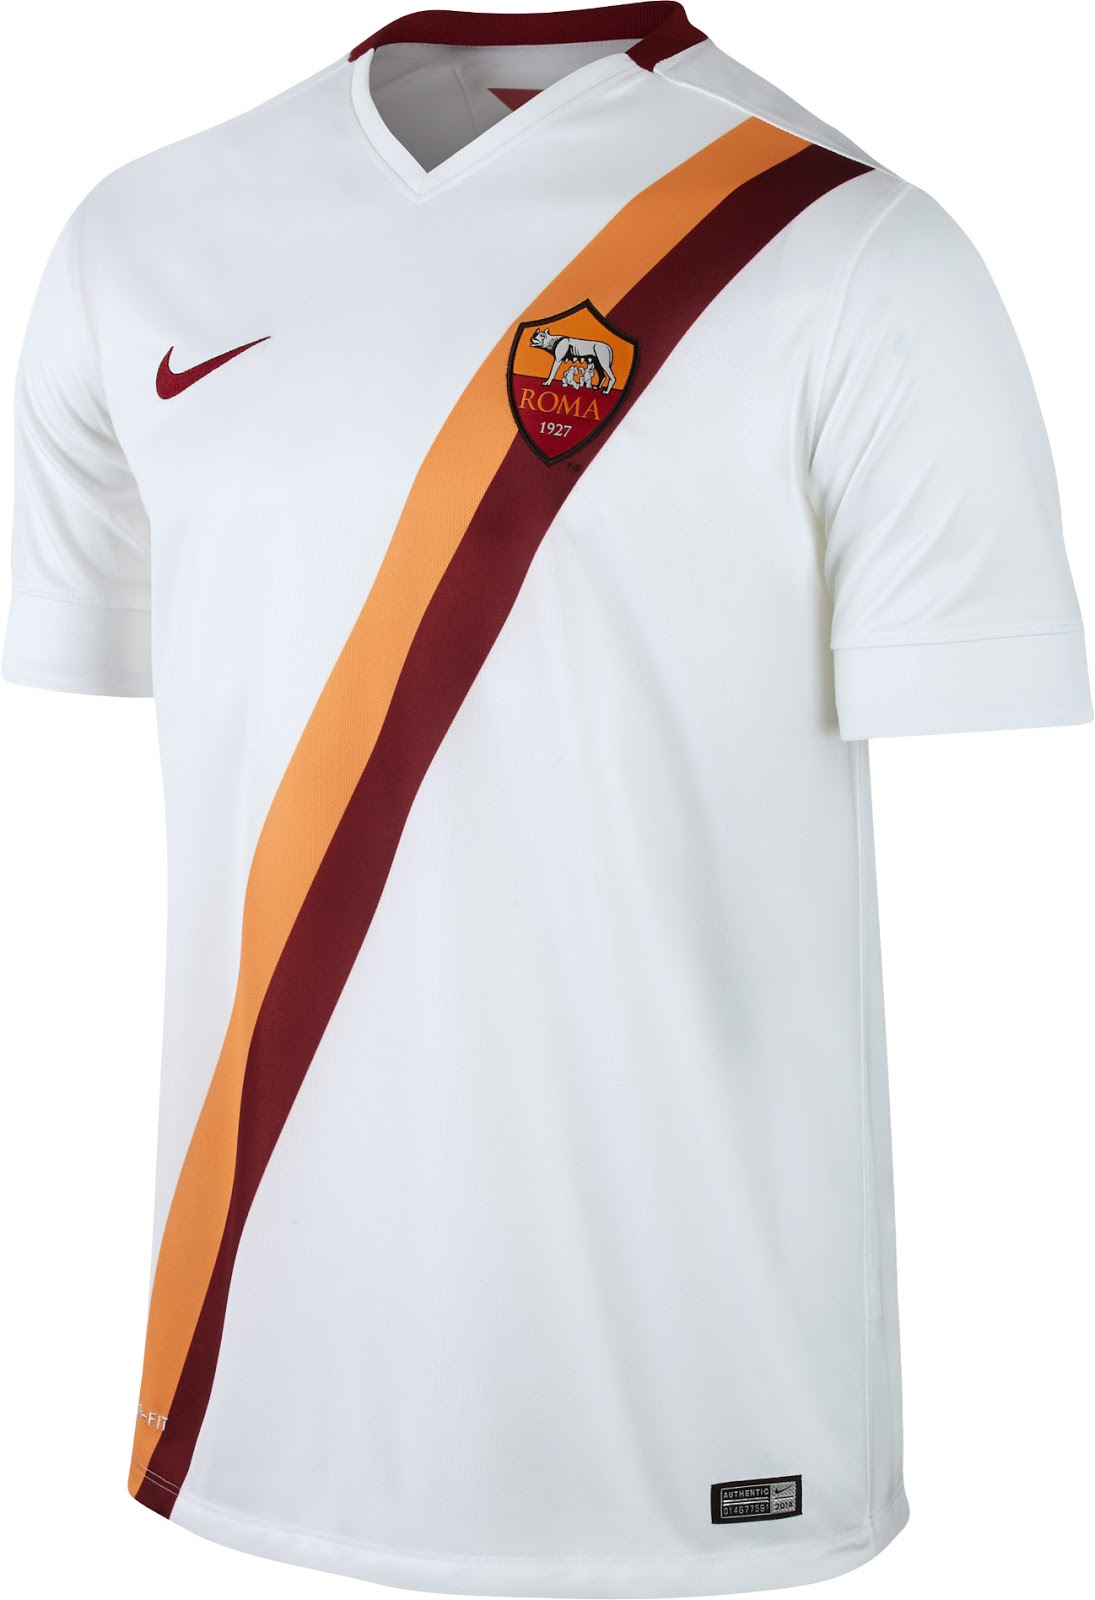 roma jersey 2014